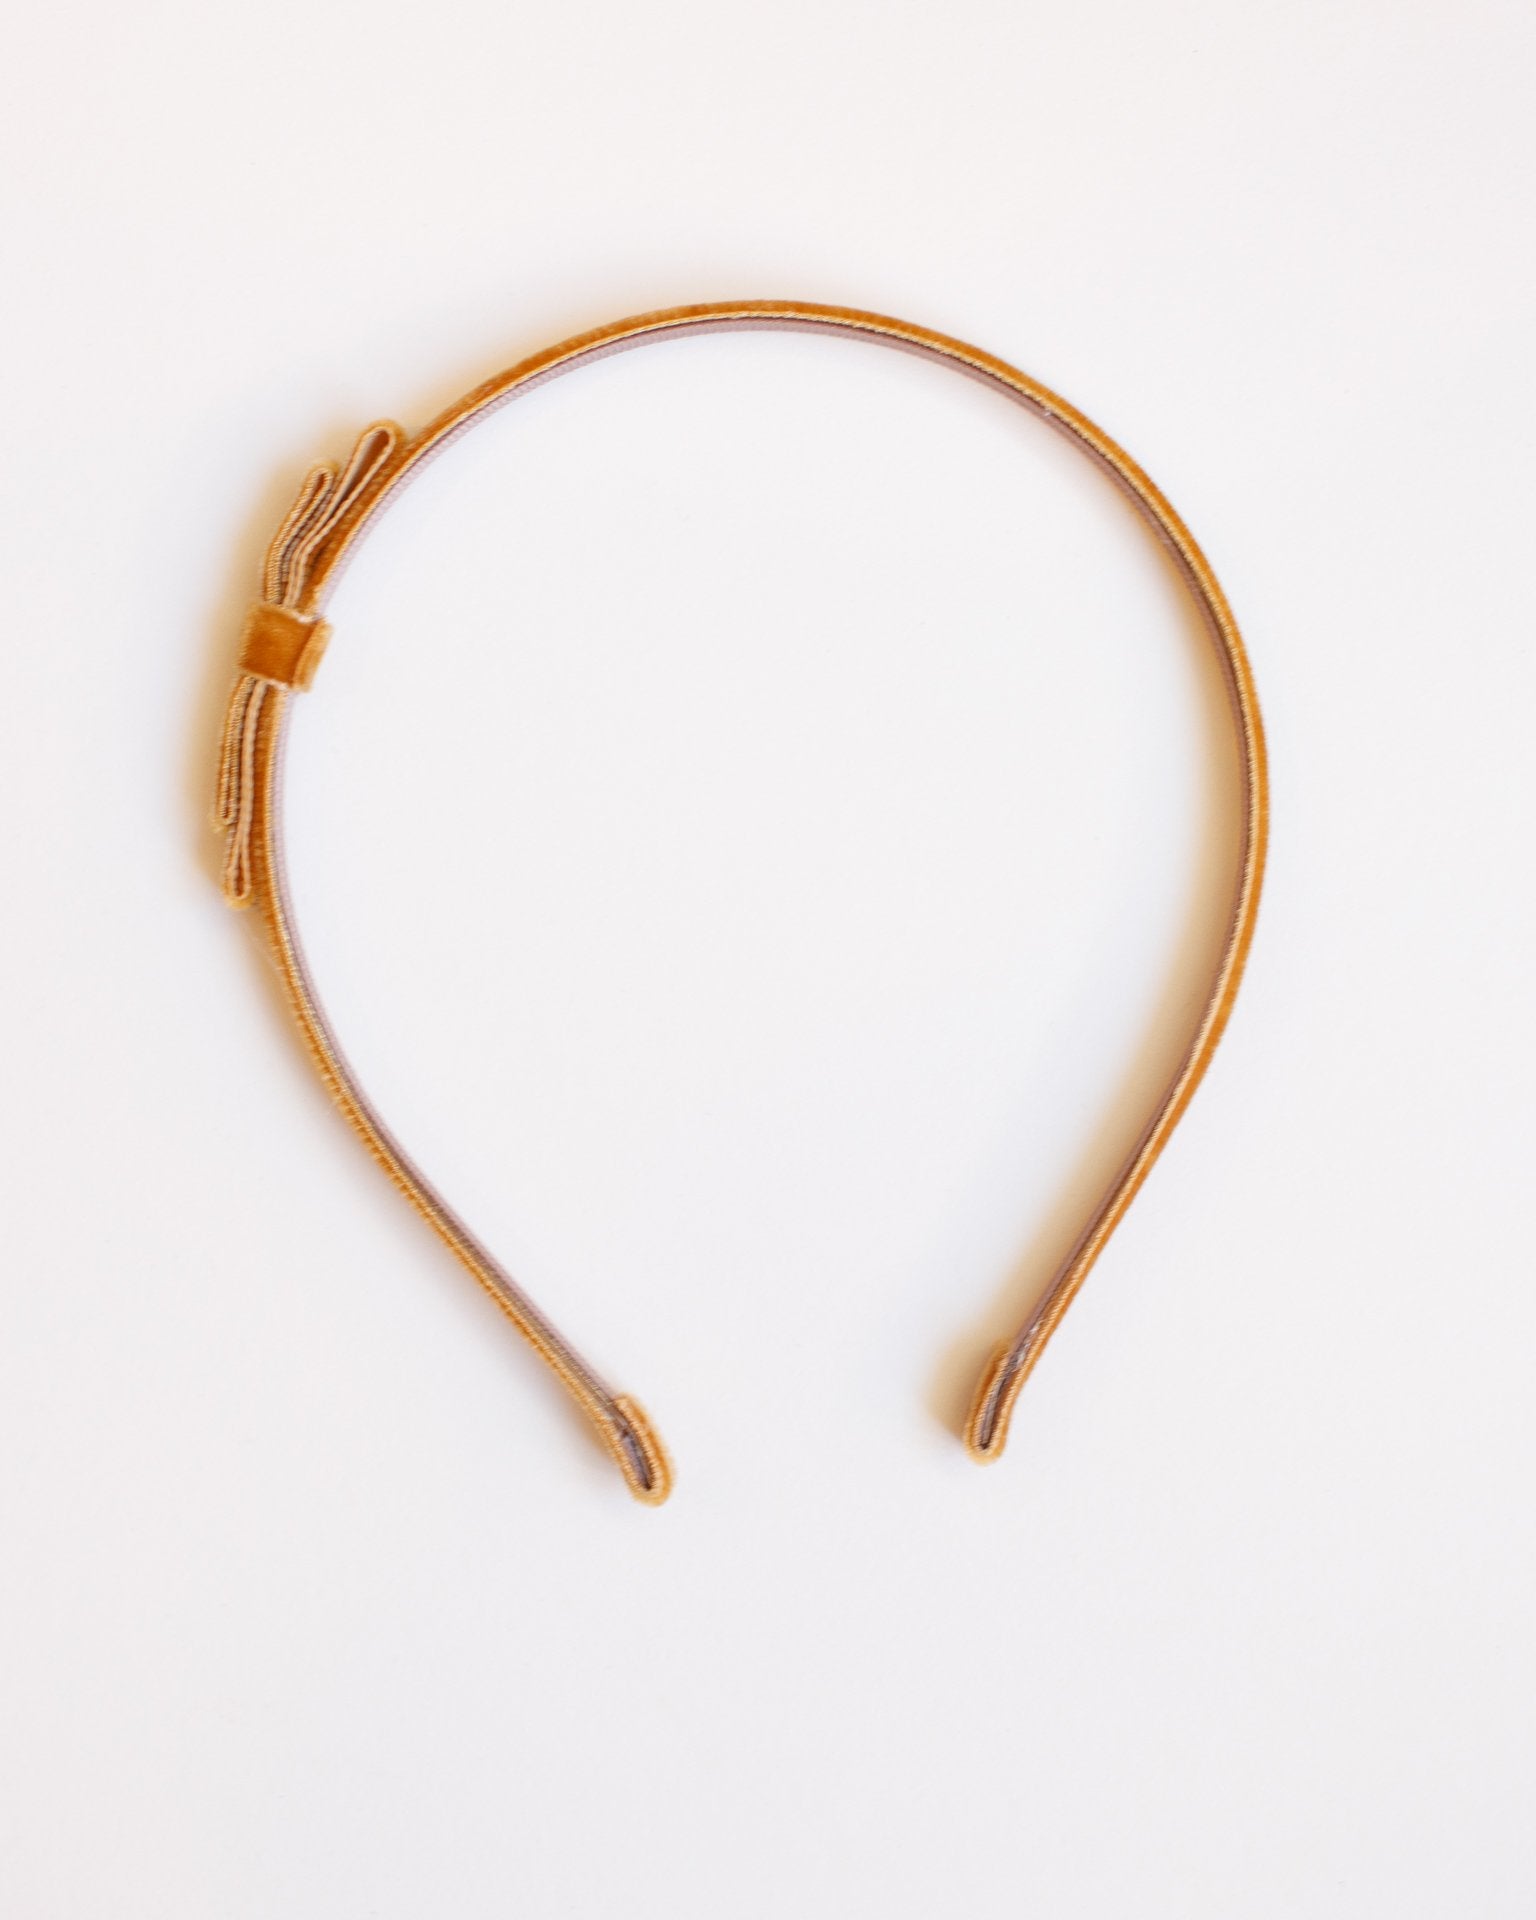 Little lululuvs accessories velvet headband in copper